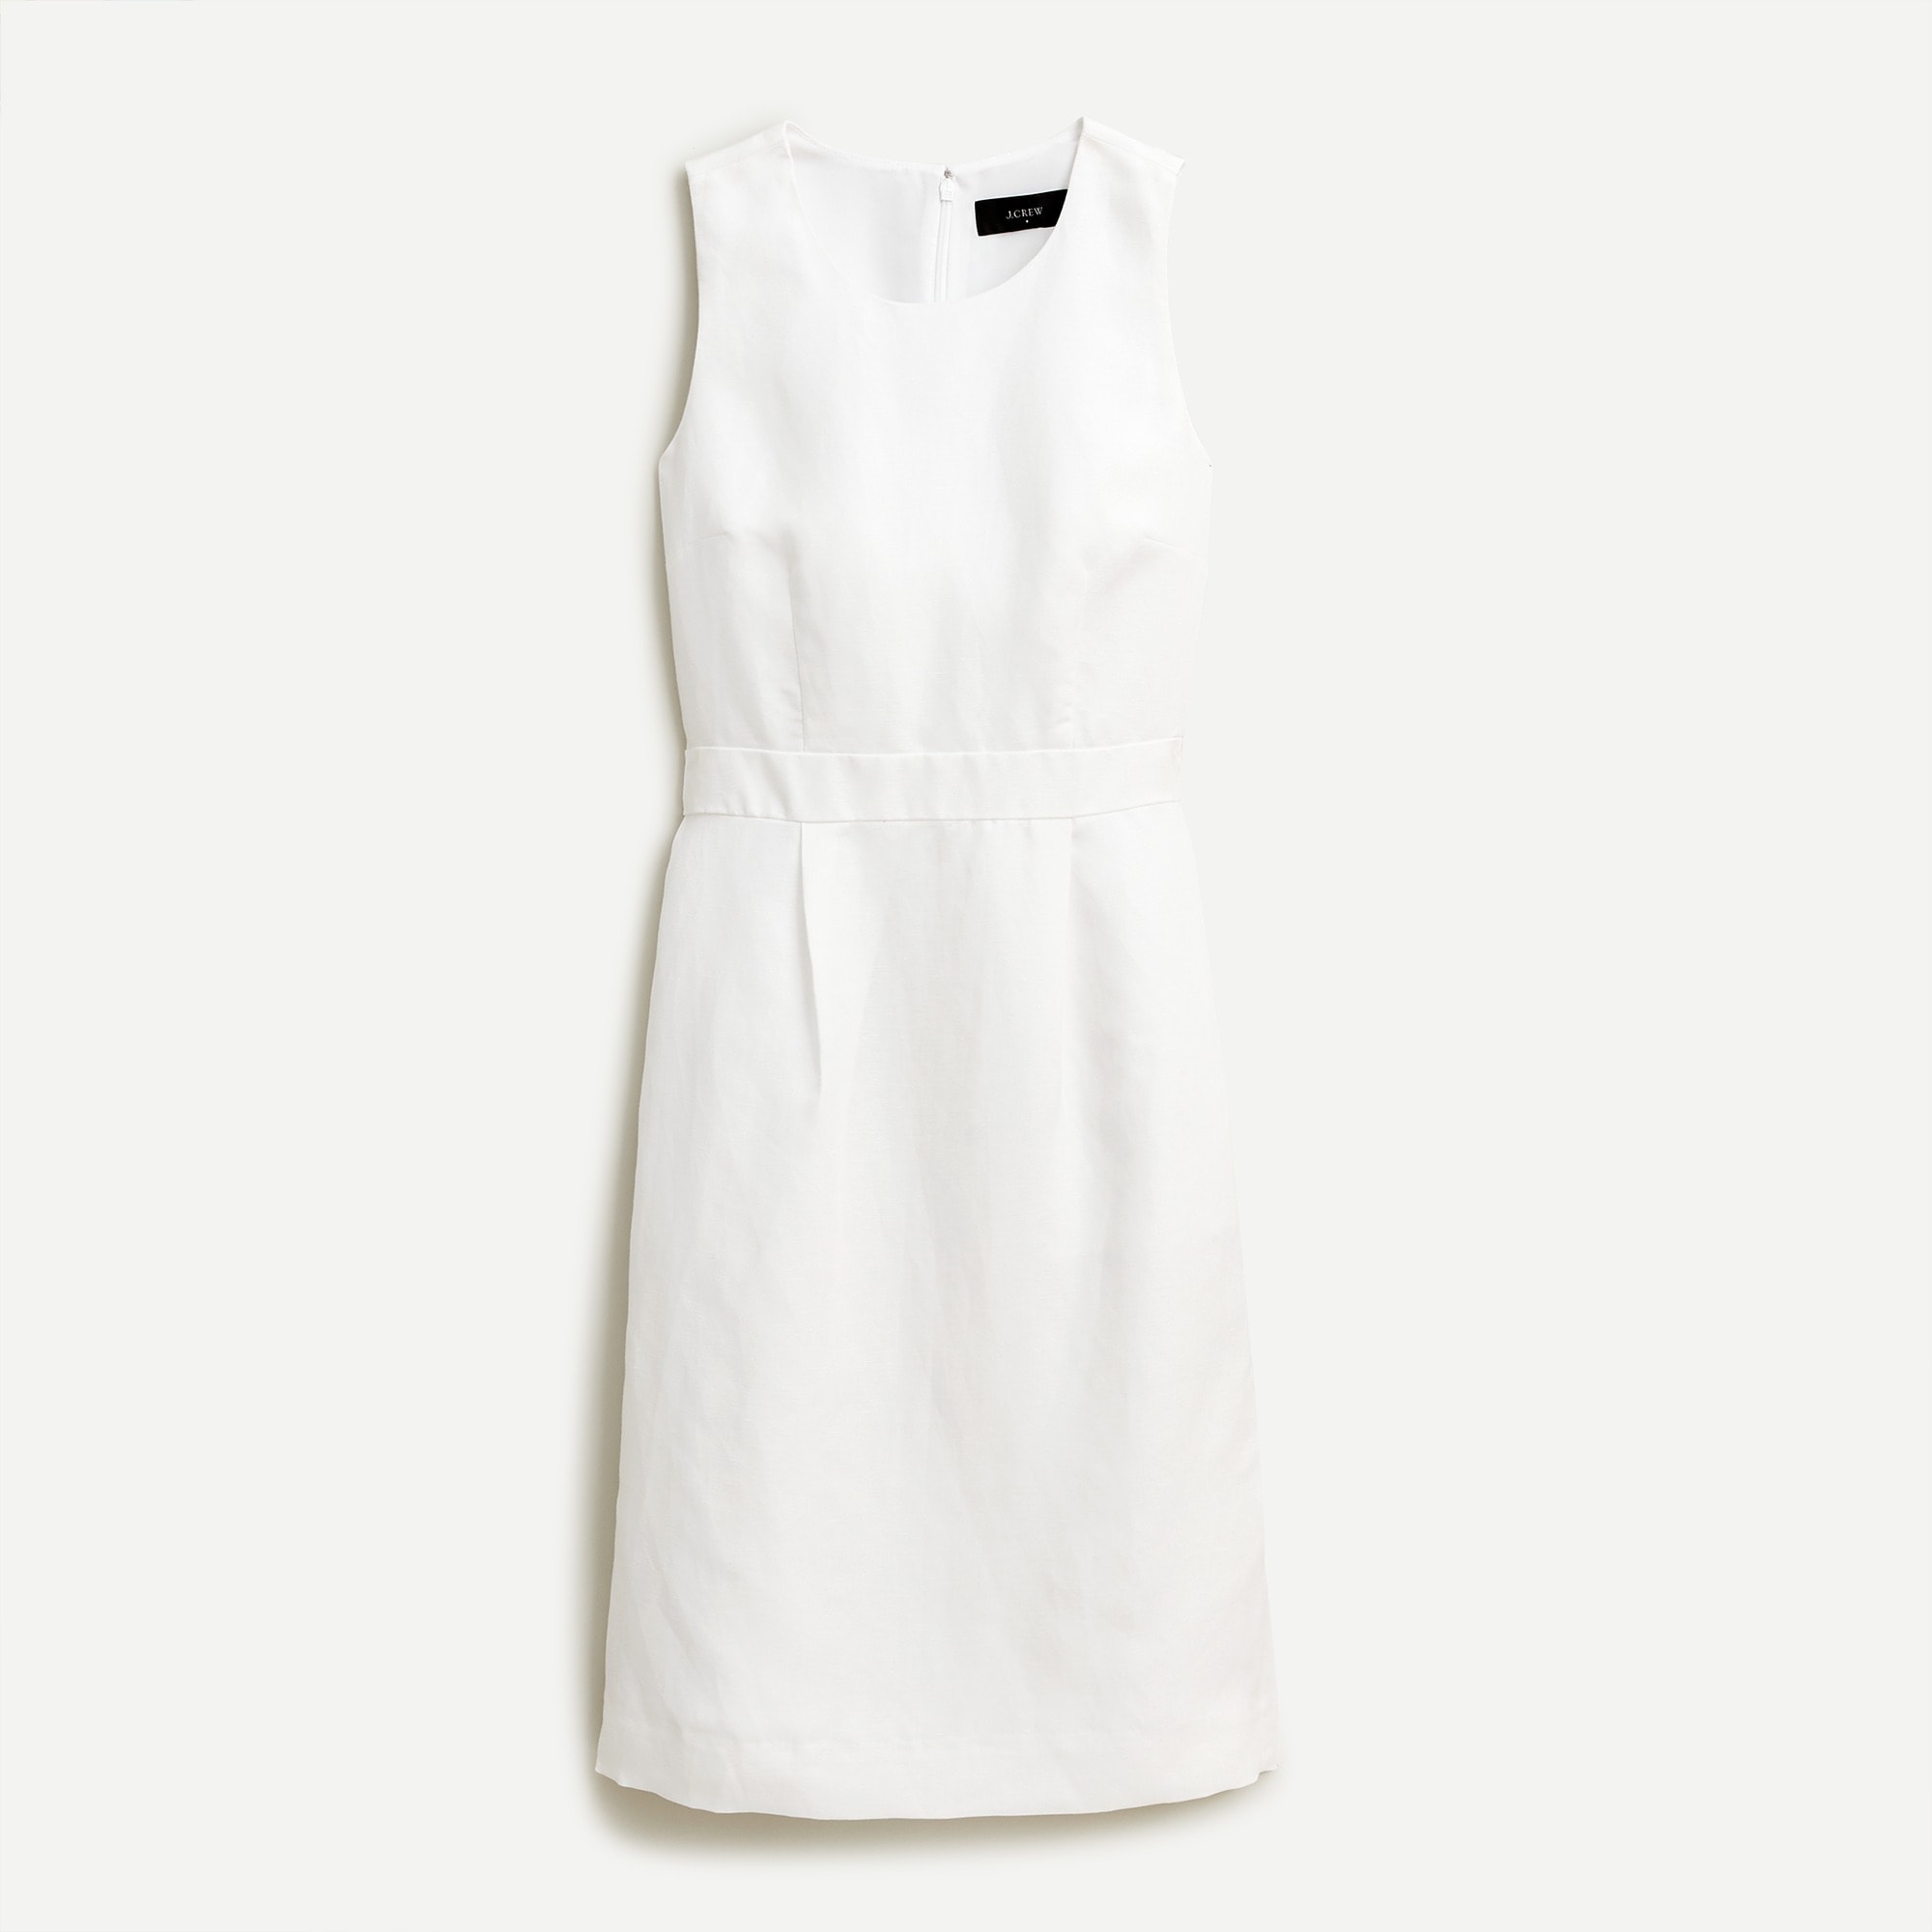 white linen sheath dress